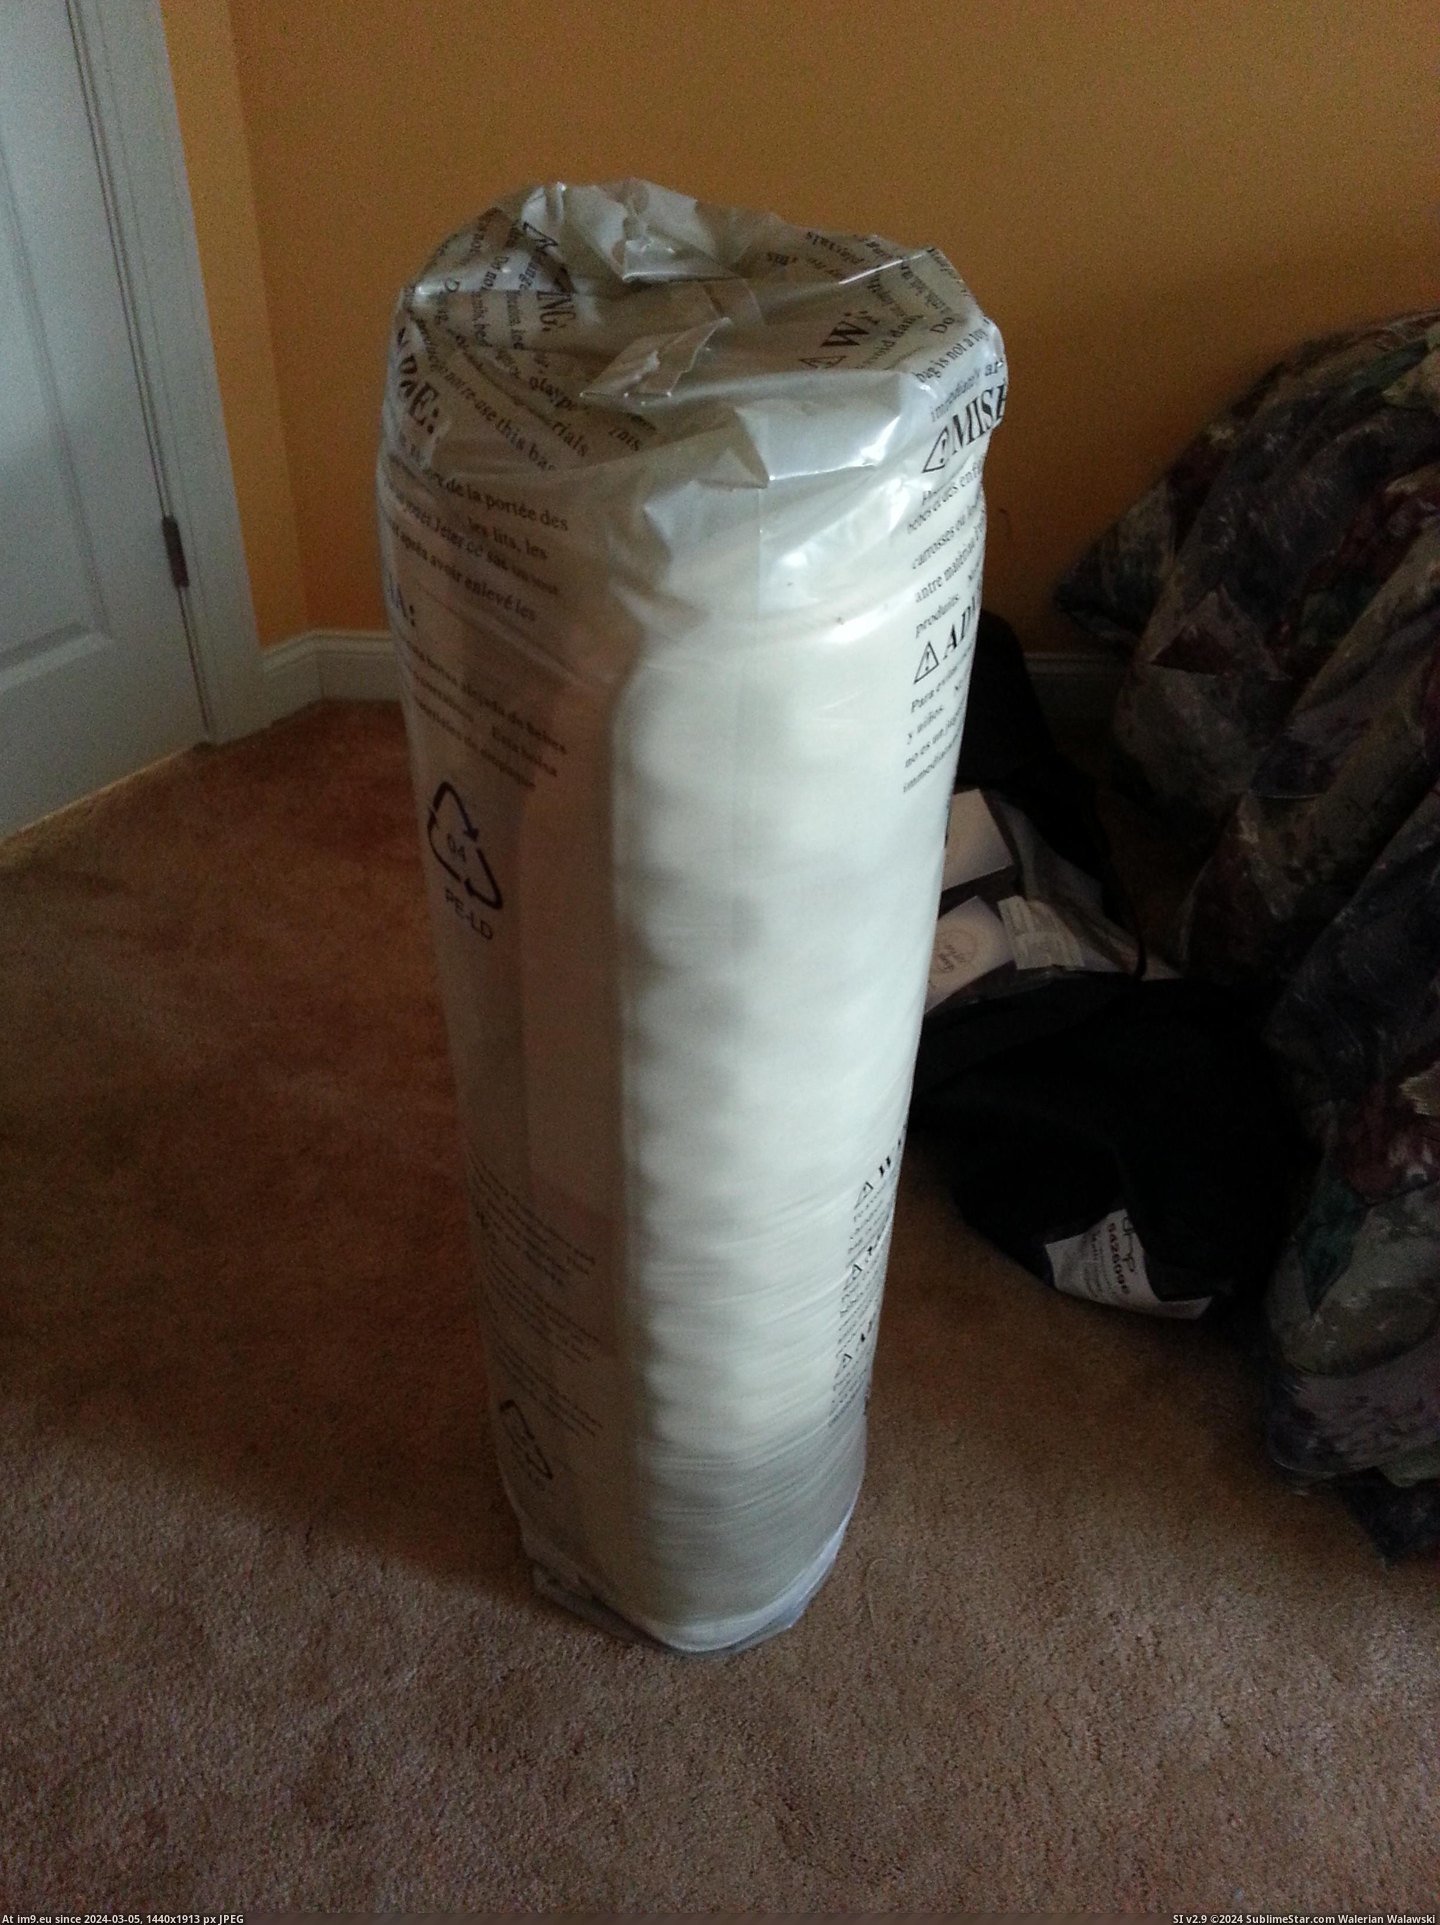 #Broke #Bag #Vacuum #Duffle #Unrolled #Seal #Mattress [Mildlyinteresting] Got a mattress in a duffle bag today, unrolled it and broke the vacuum seal 7 Pic. (Obraz z album My r/MILDLYINTERESTING favs))